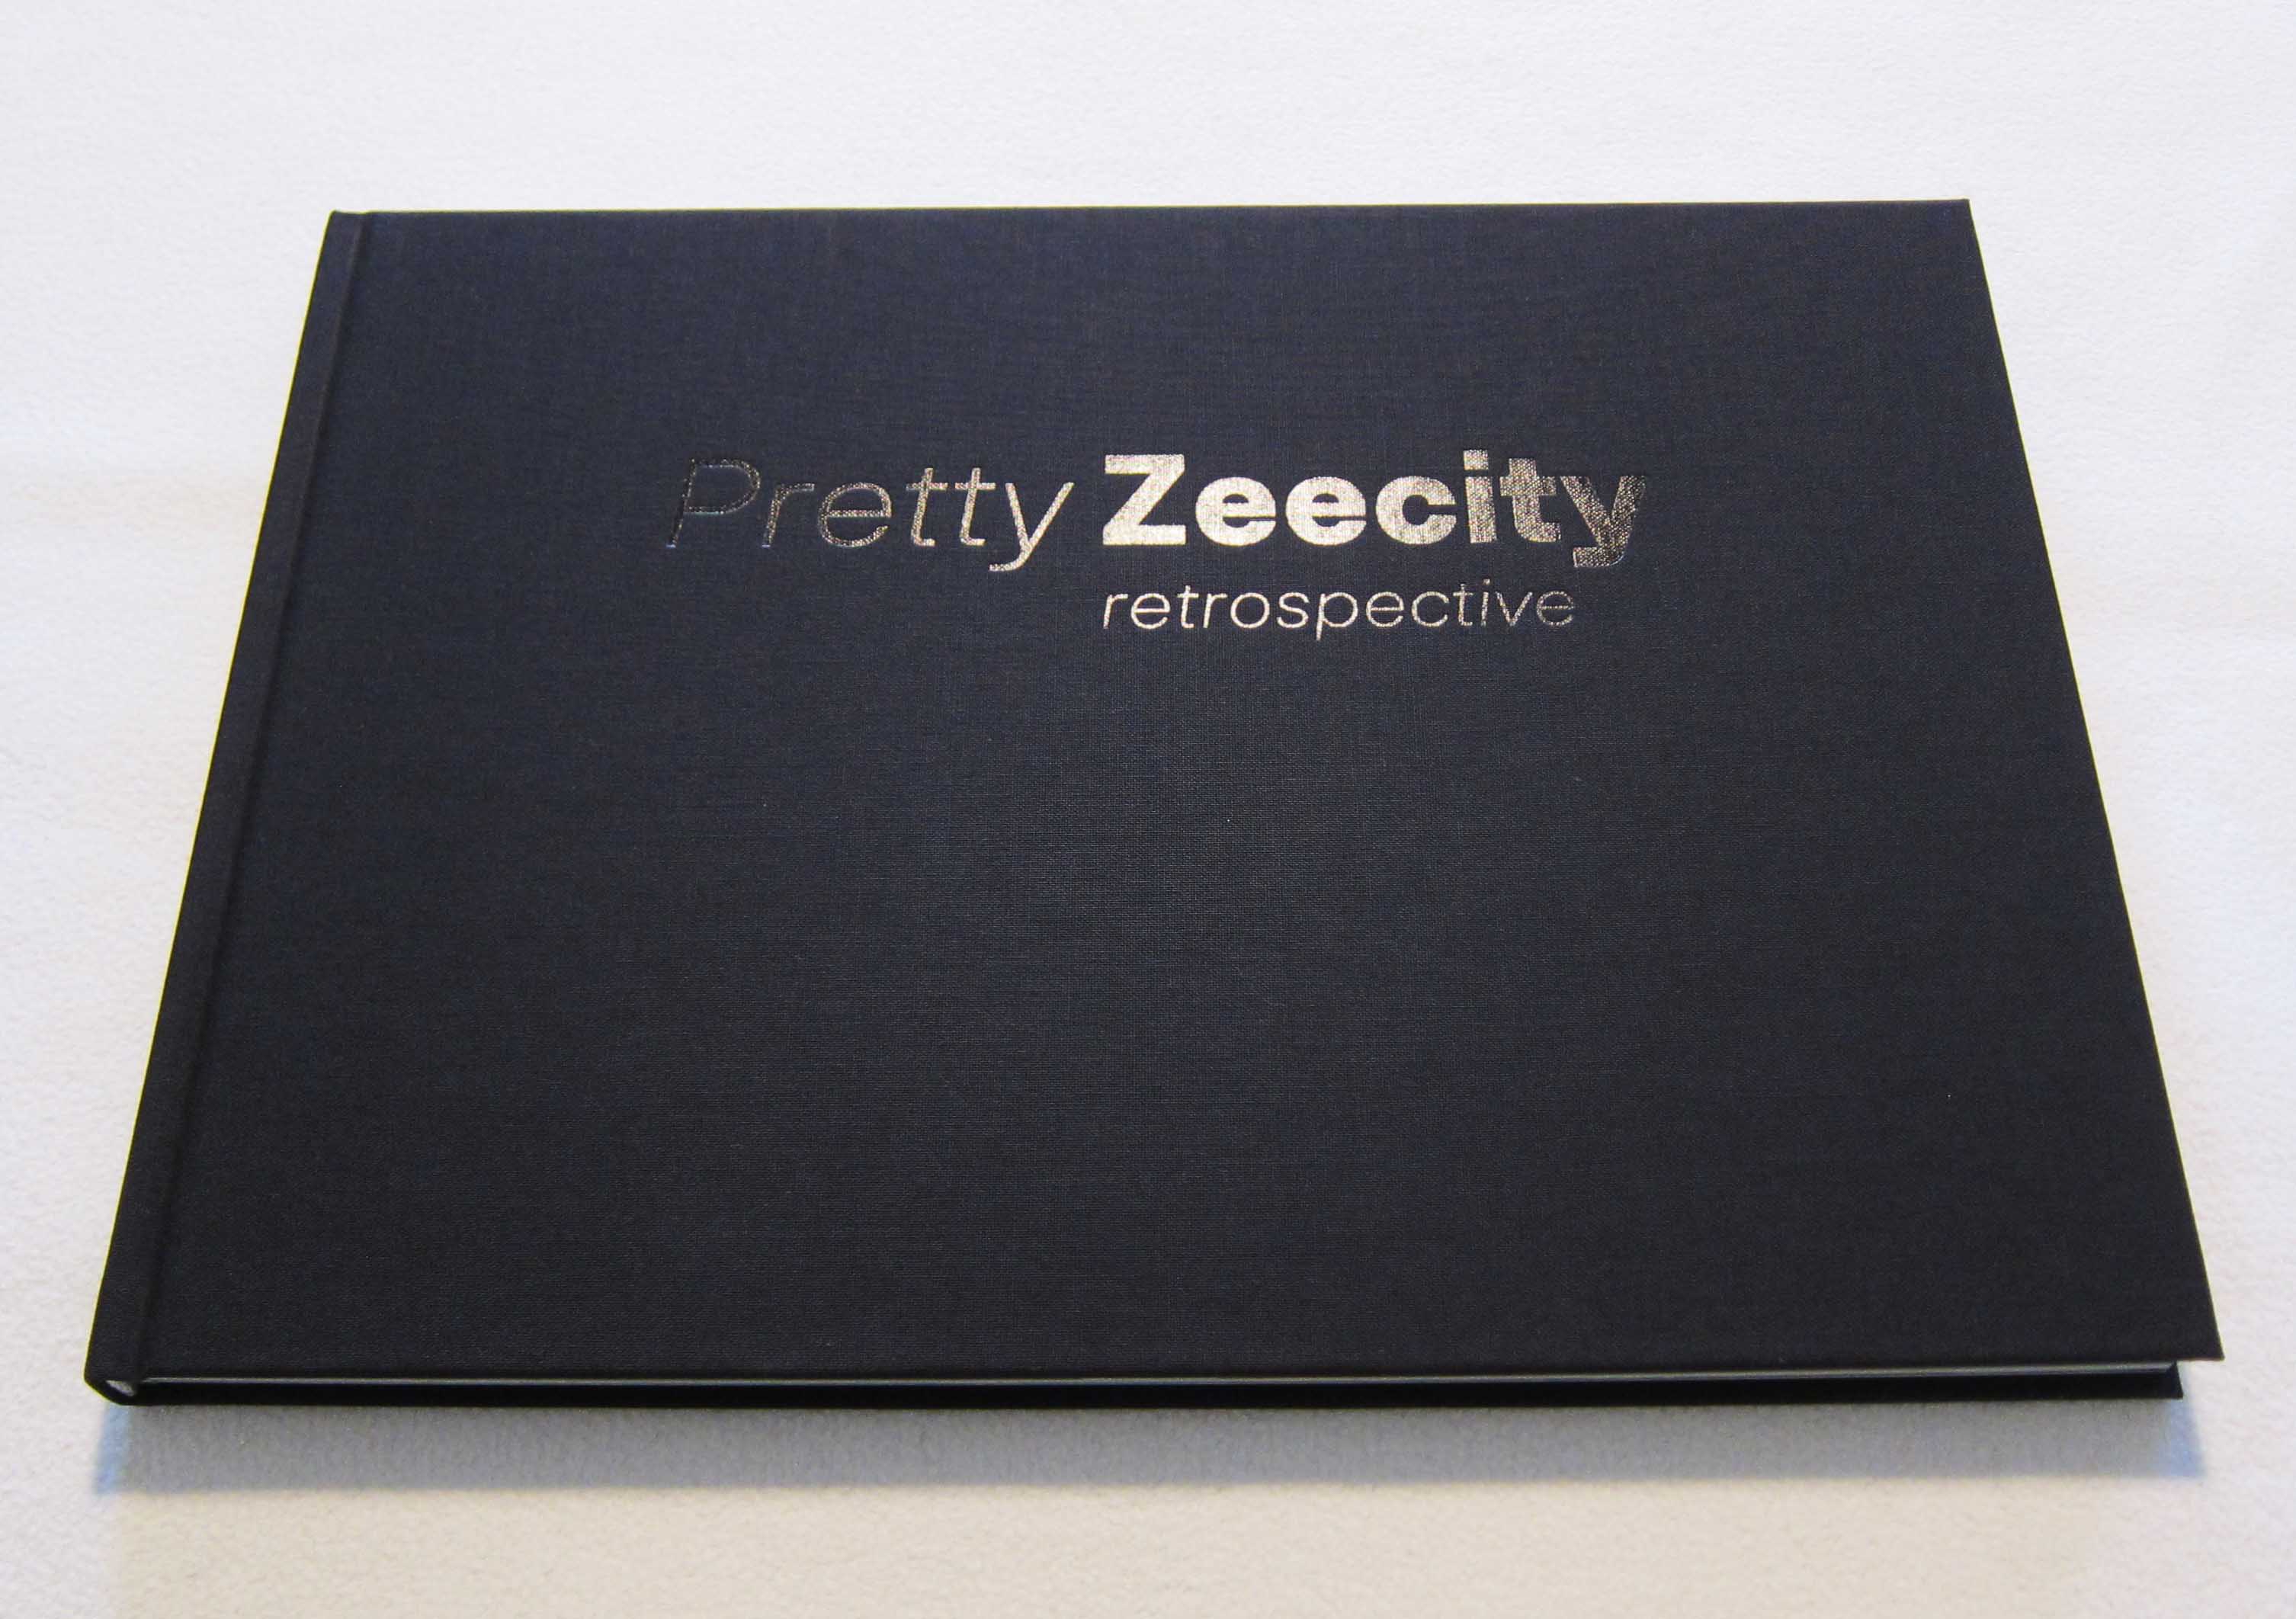 Pretty Zeecity retrospective